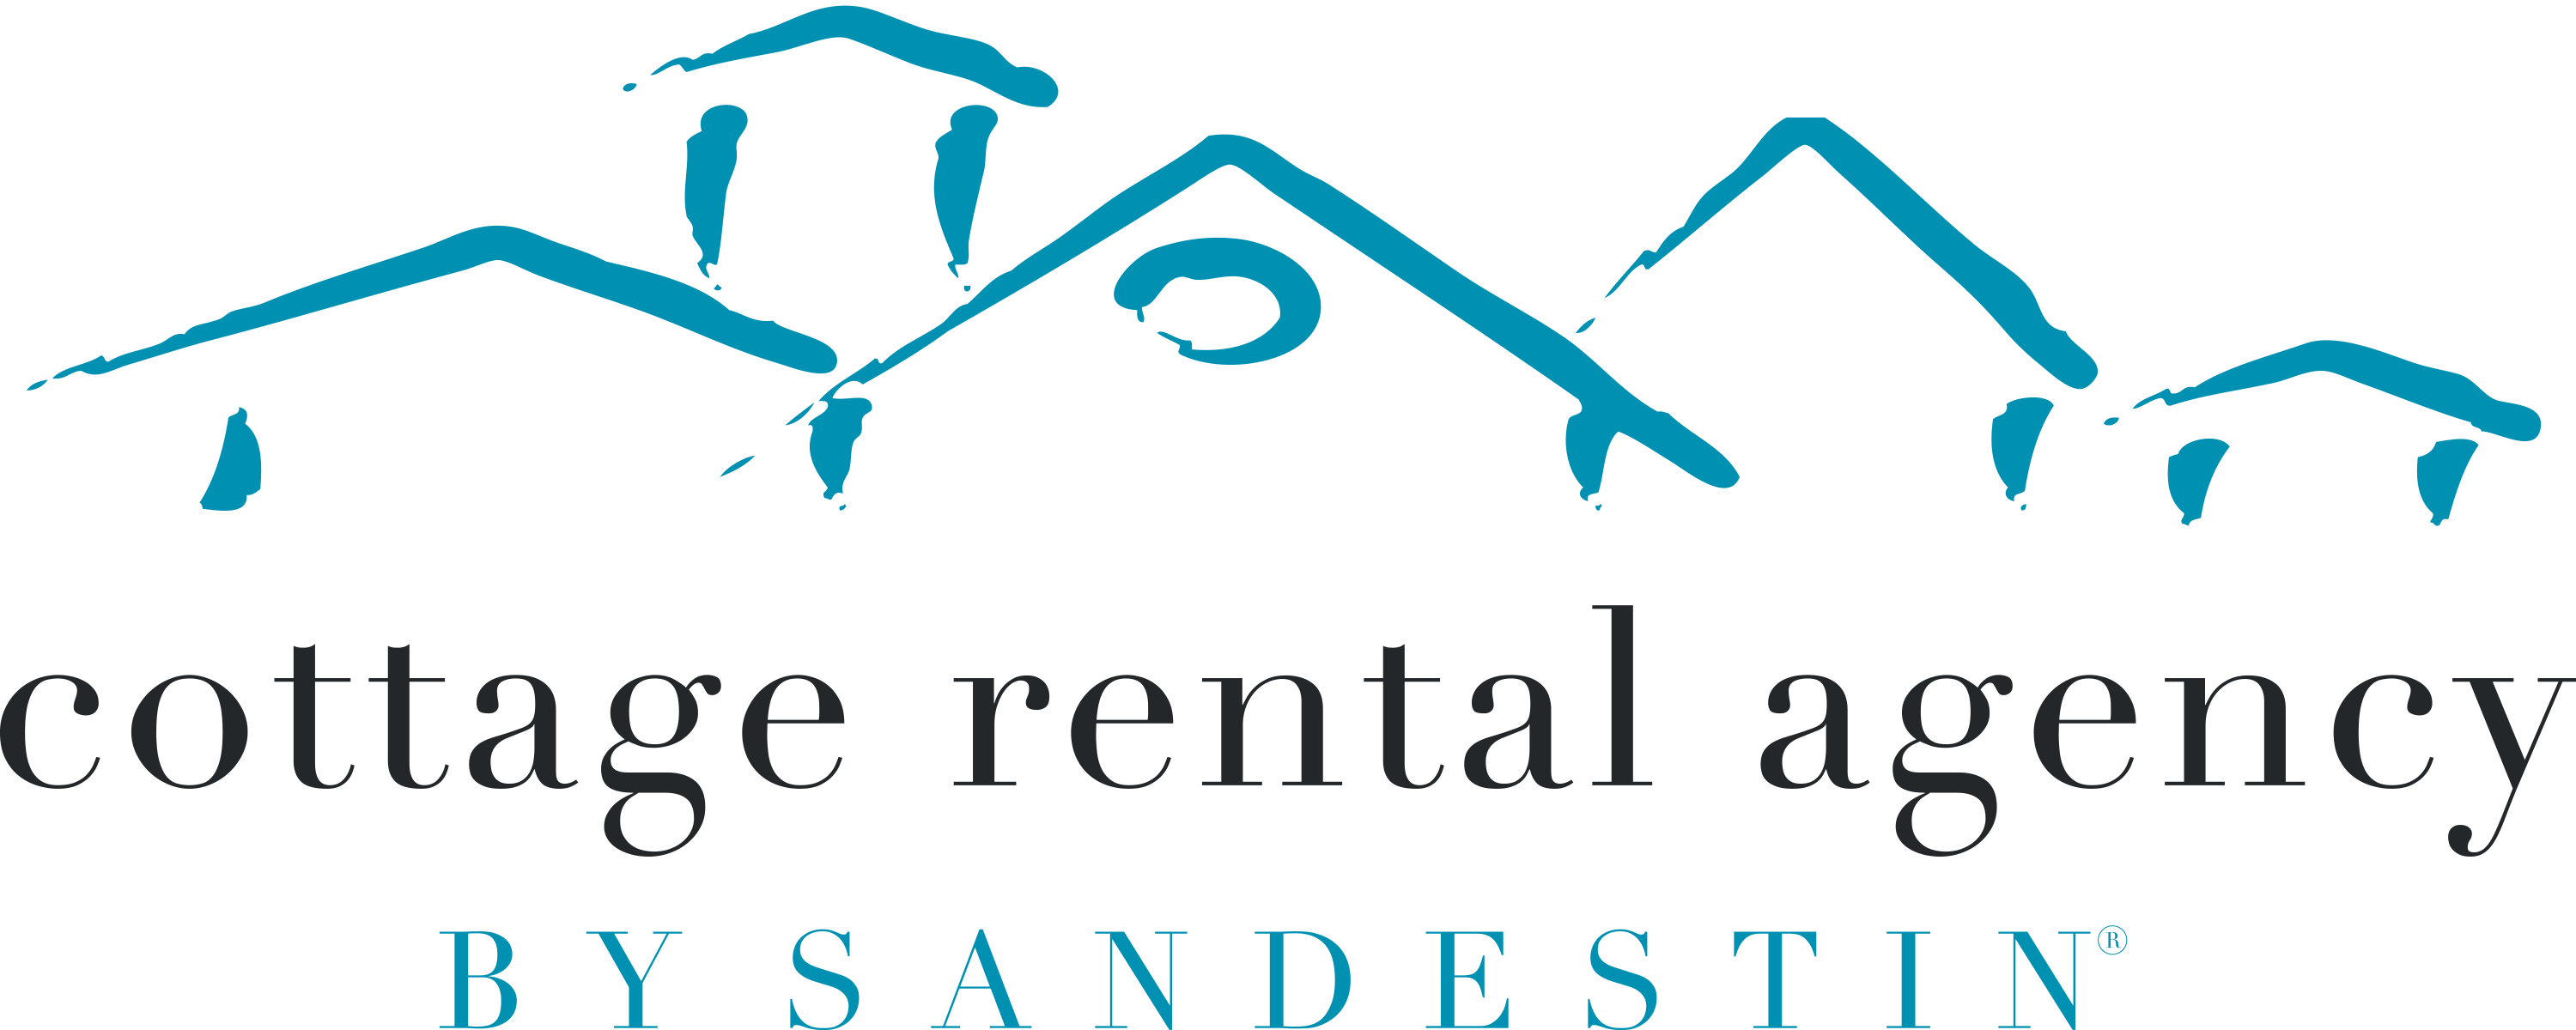 Cottage Rental Agency by Sandestin 